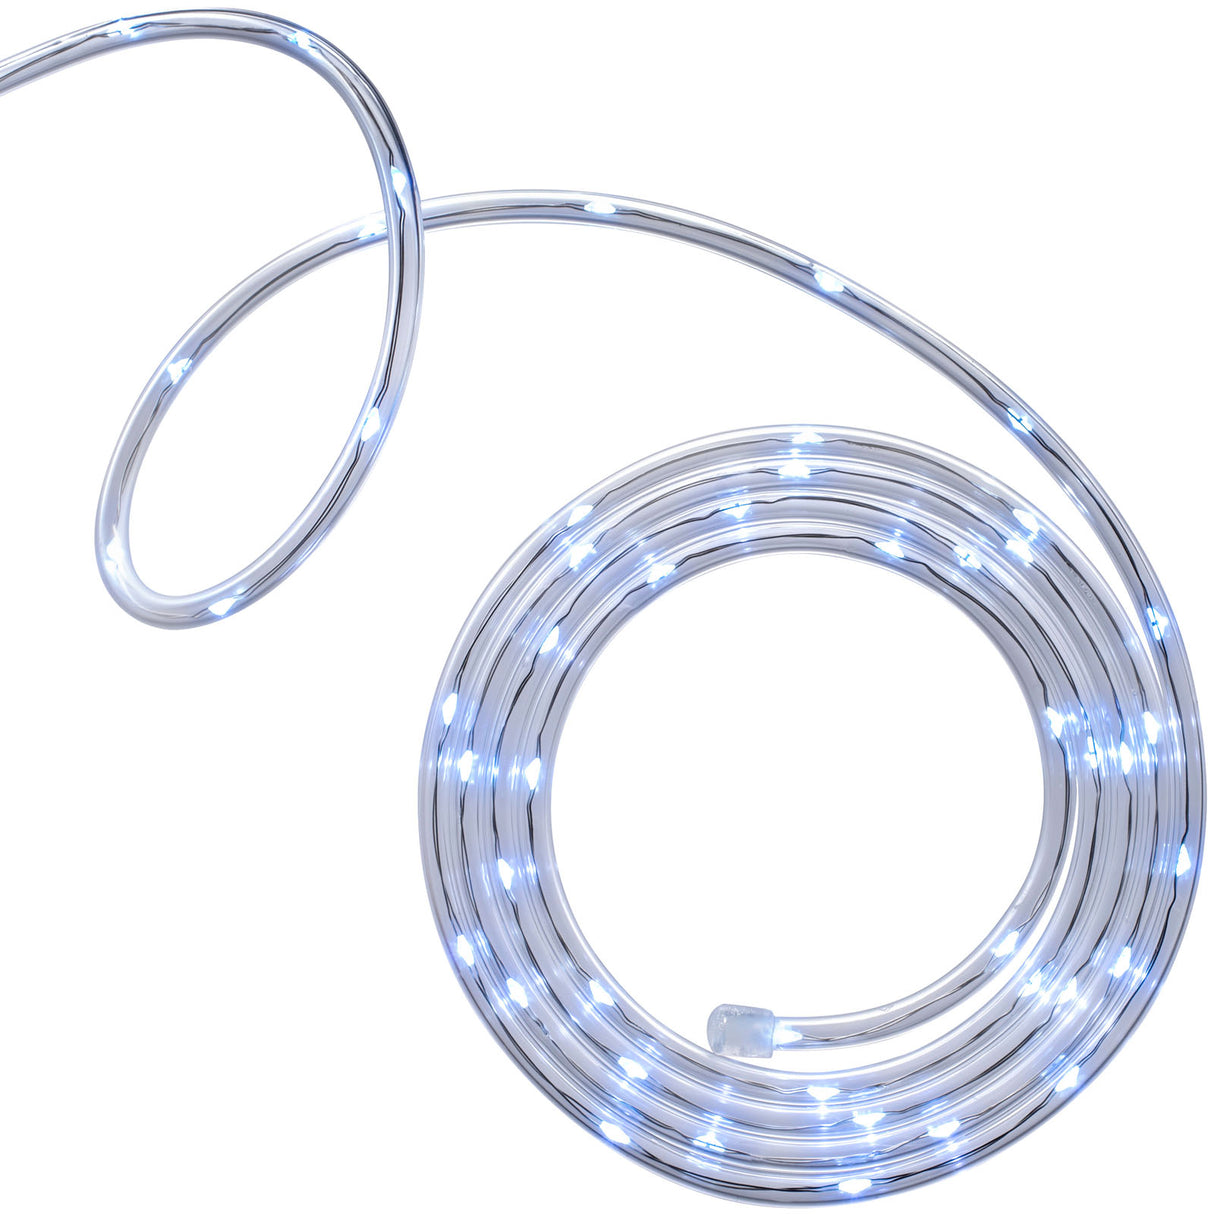 Multi-Function LED Copper Rope Light, Bright White